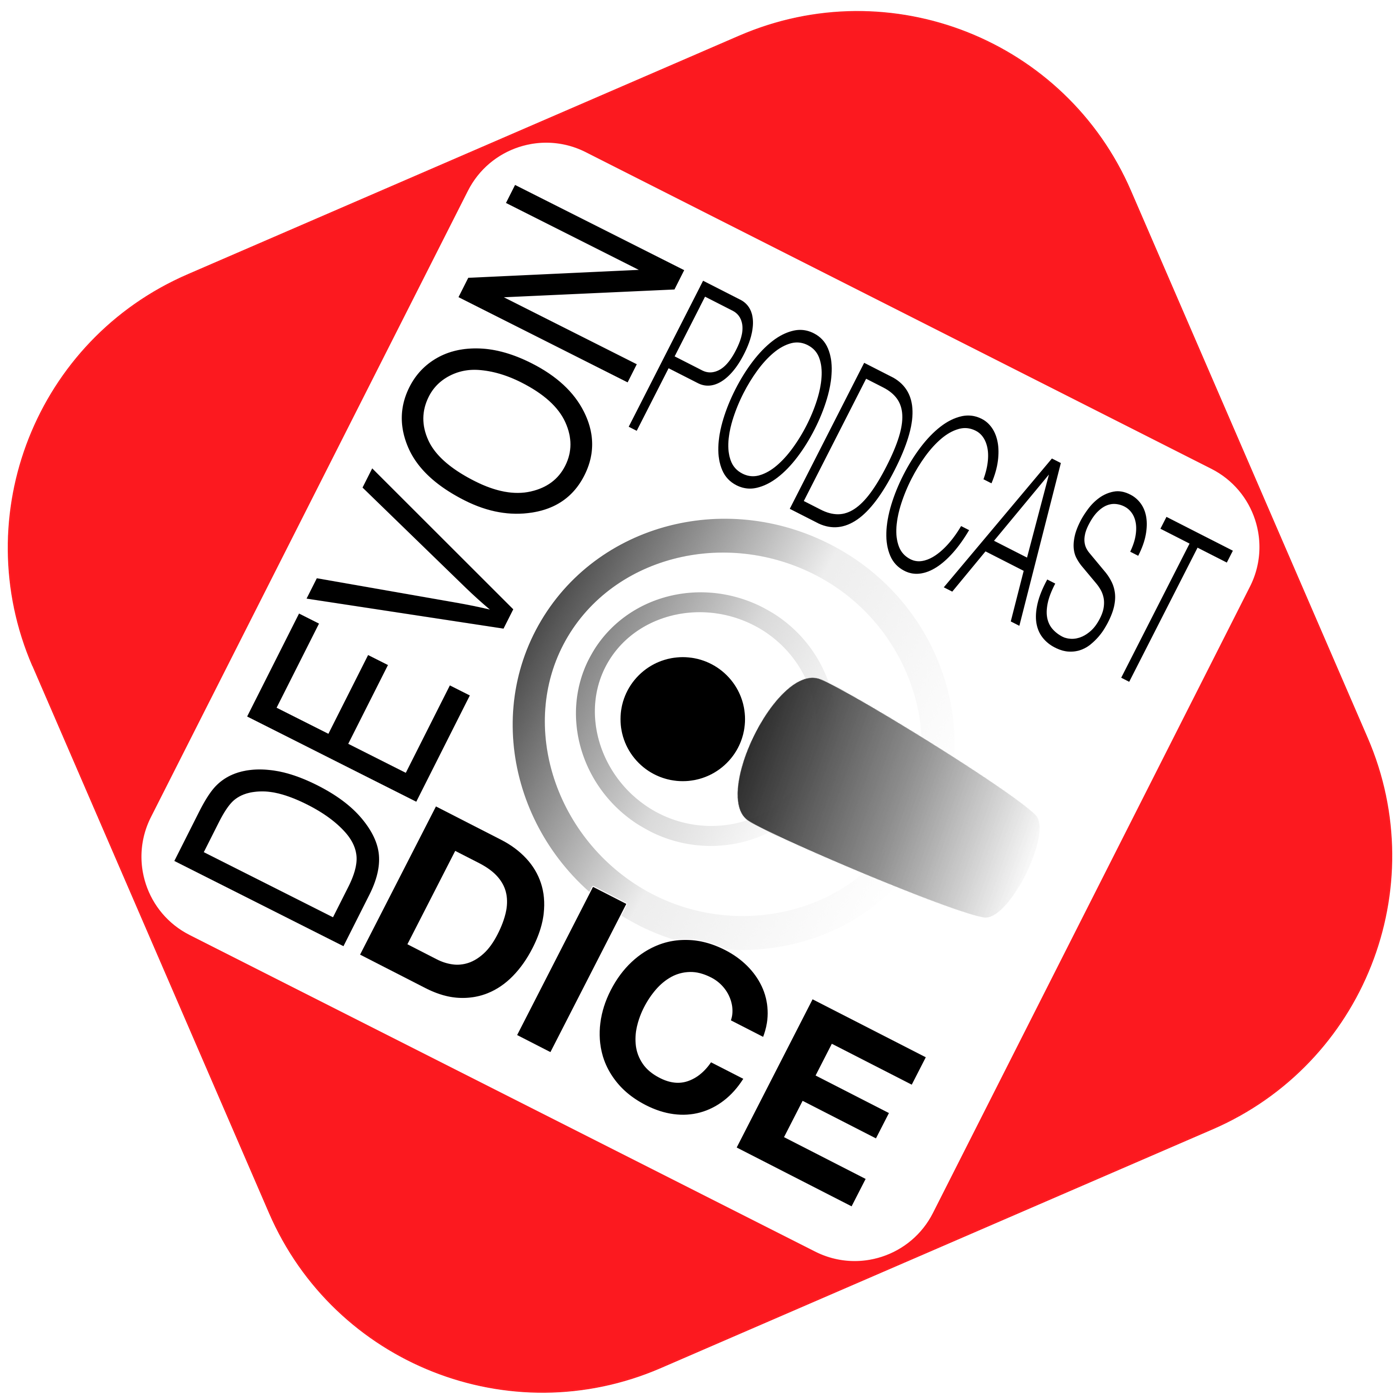 8. The Devon Dice (put together last minute) Podcast